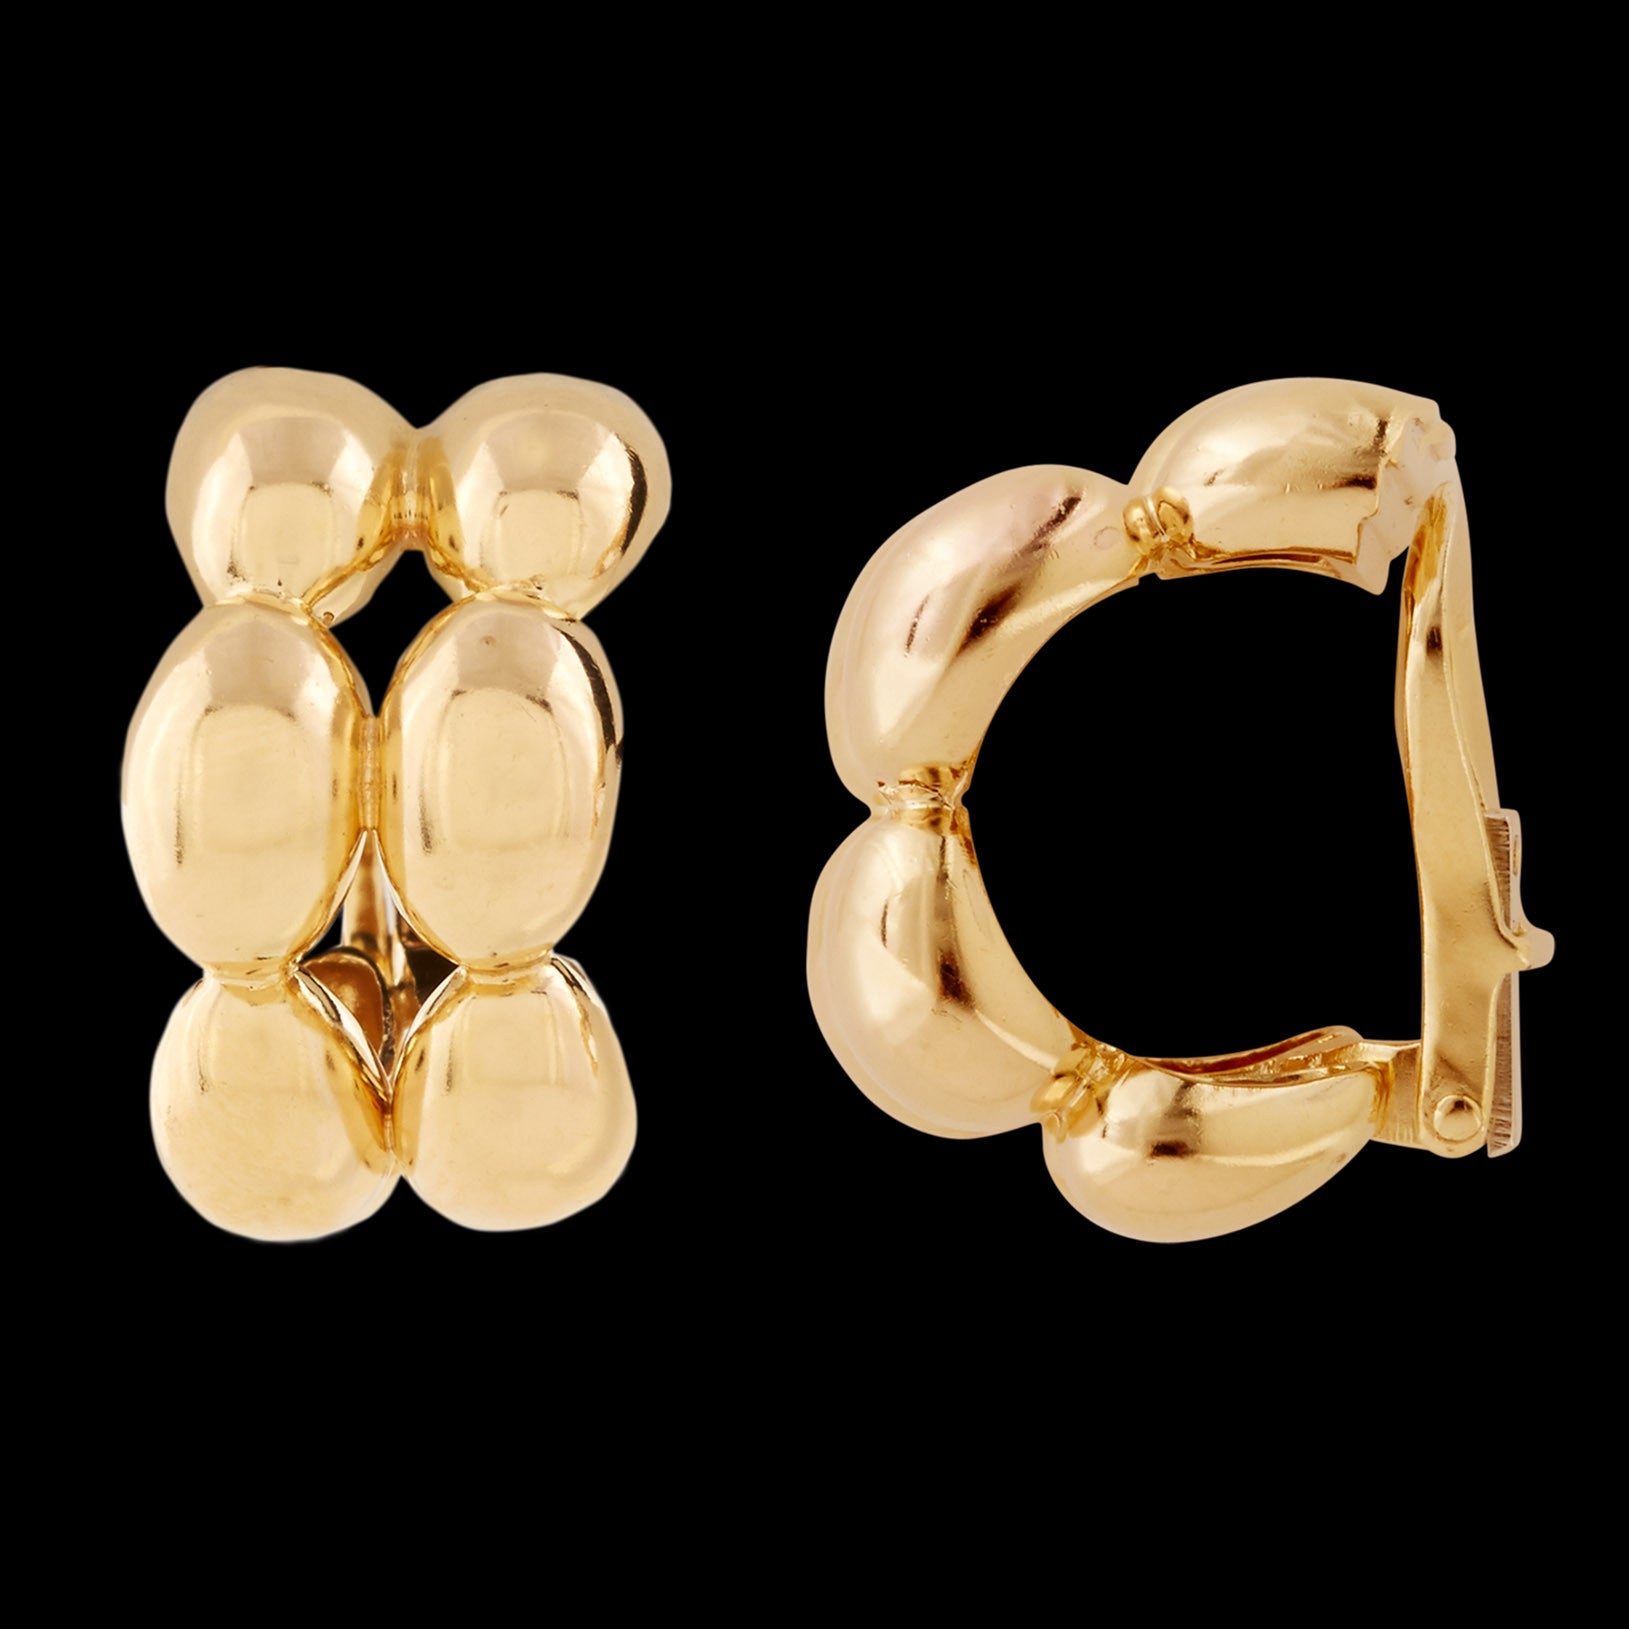 High Jellewy earrings by Chaumet - Gold and diamond earrings